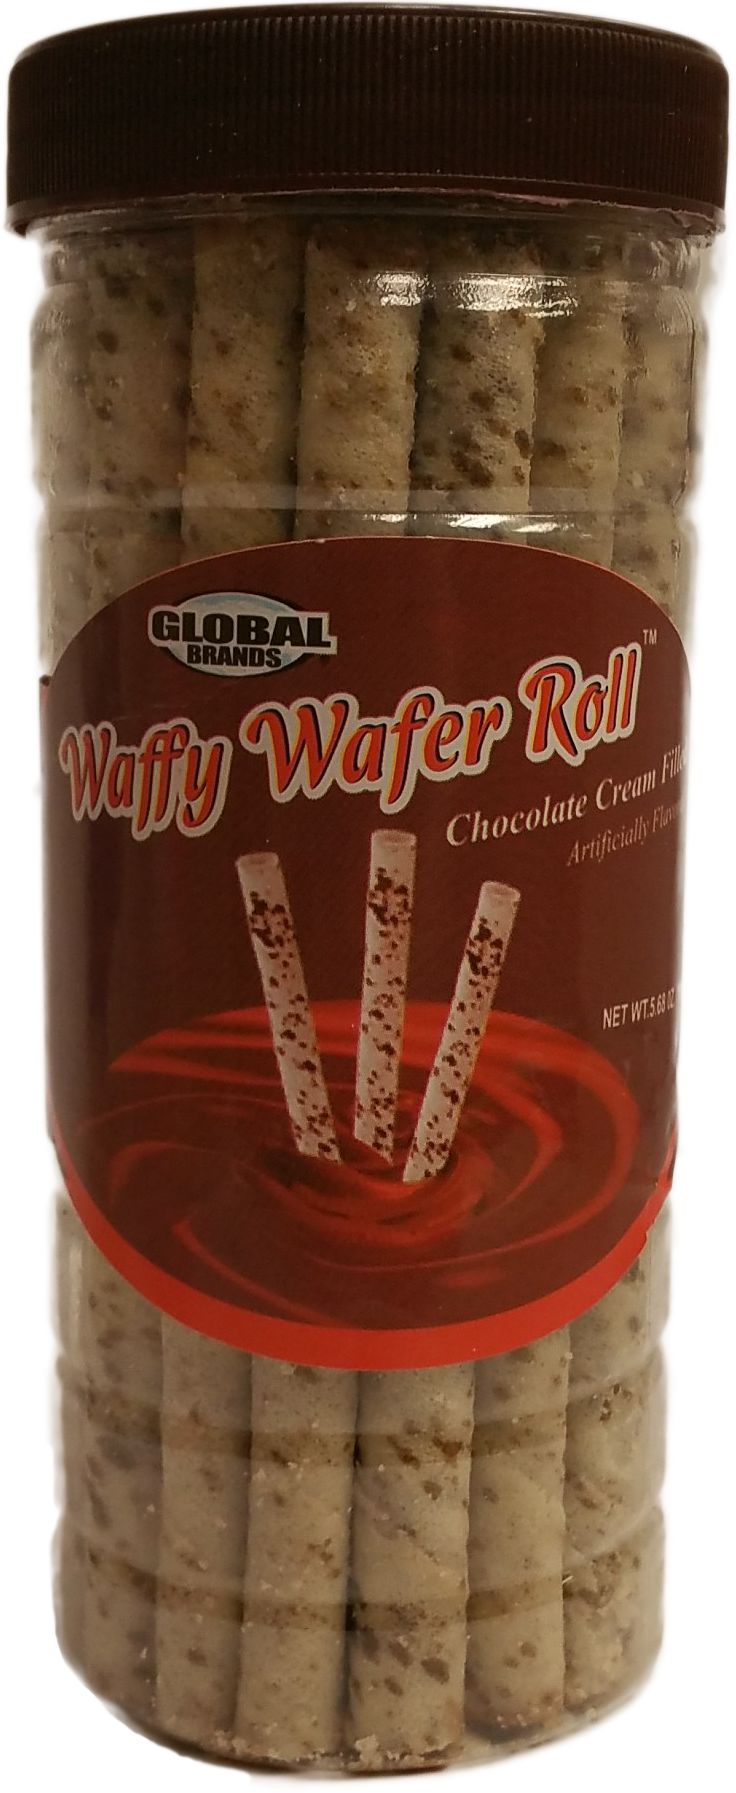 Waffy Wafer Rolls Chocolate